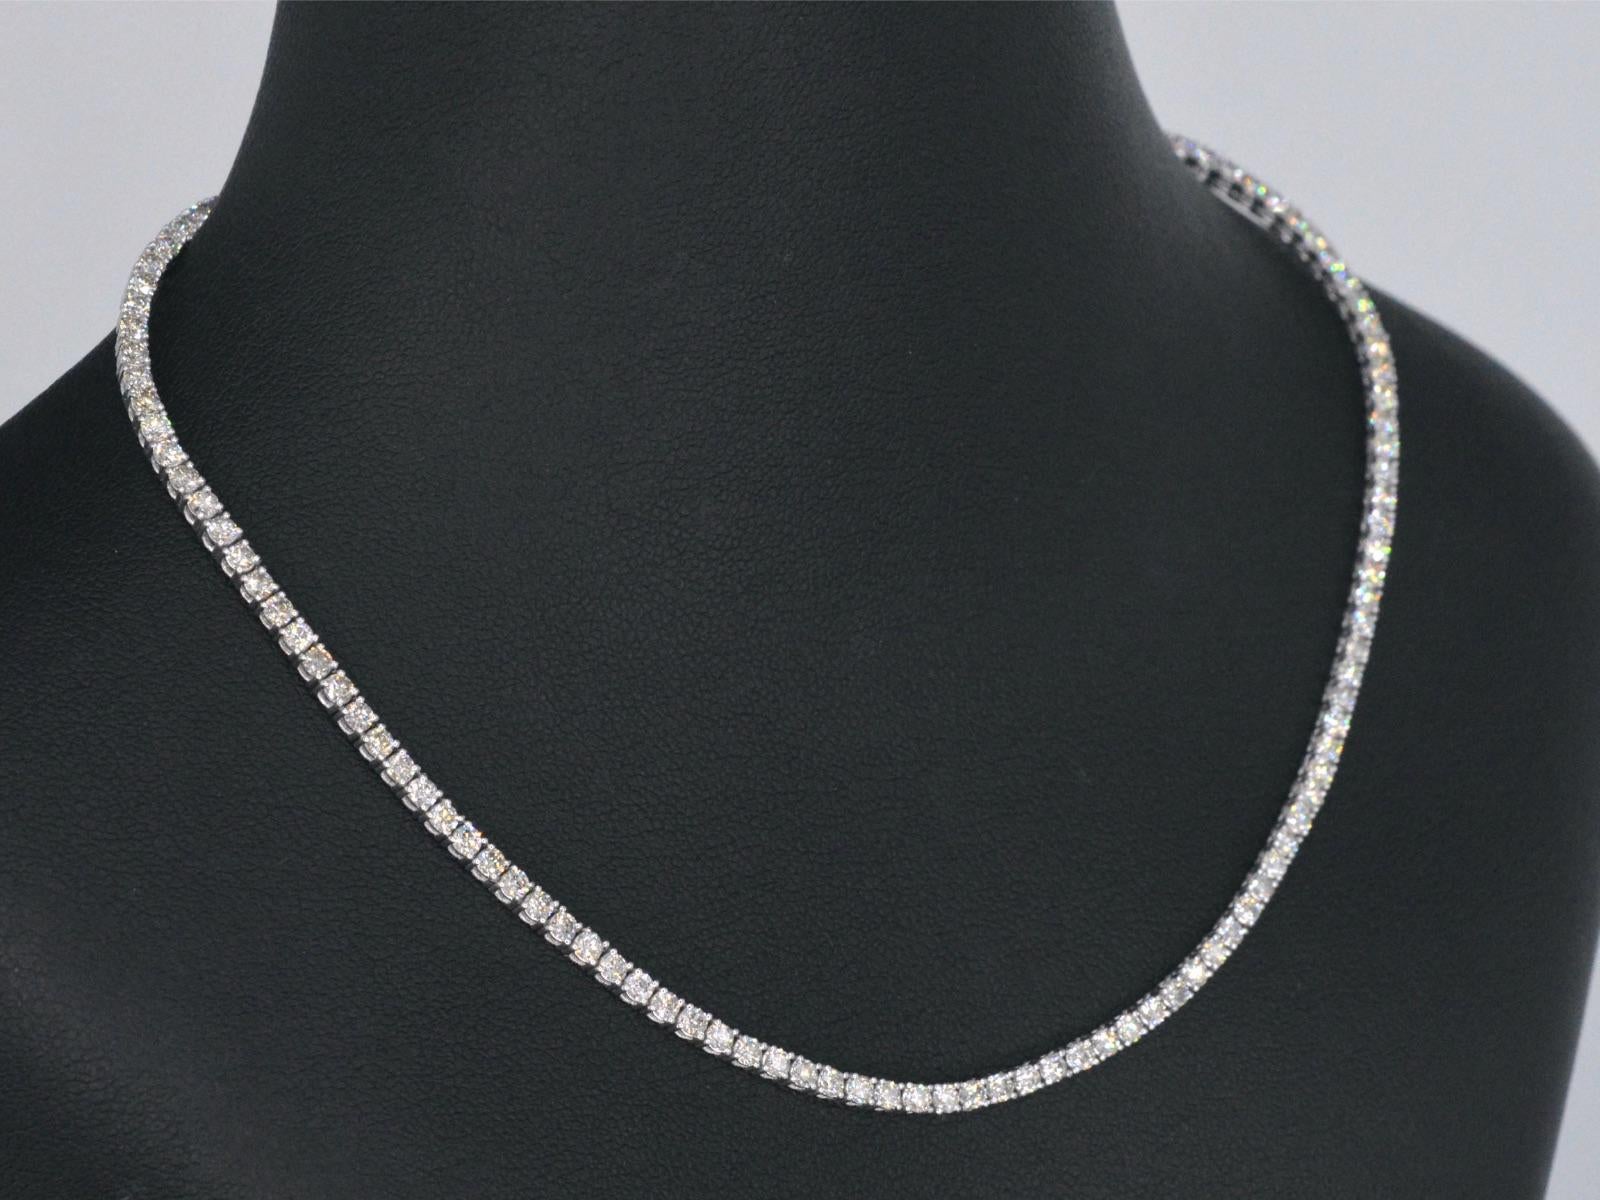 Brilliant Cut Golden Tennis Necklace with diamonds 5.60 carat For Sale